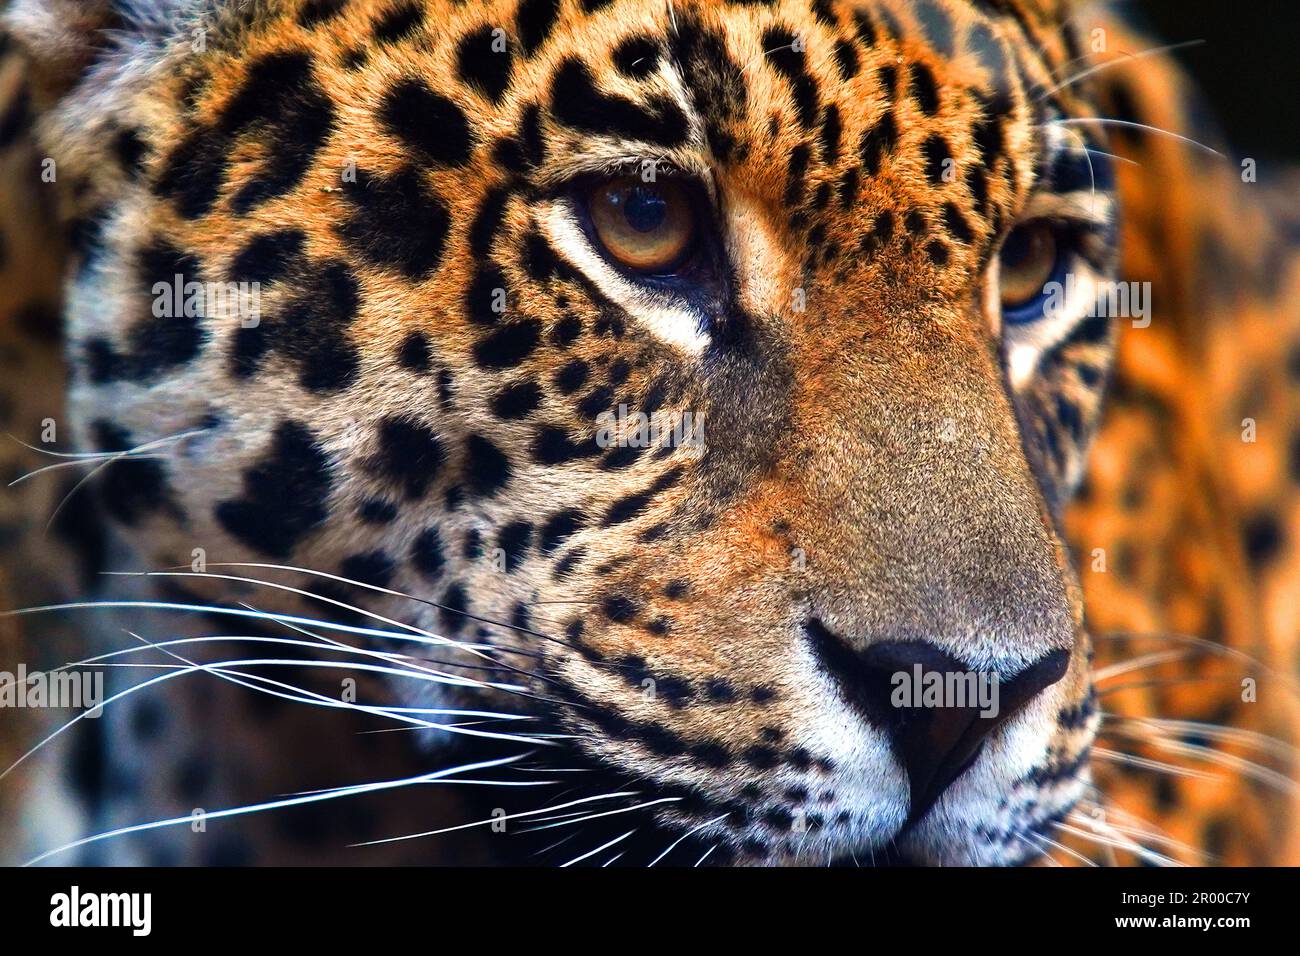 Jaguar, yaguar, yaguareté. Argentina. Stock Photo